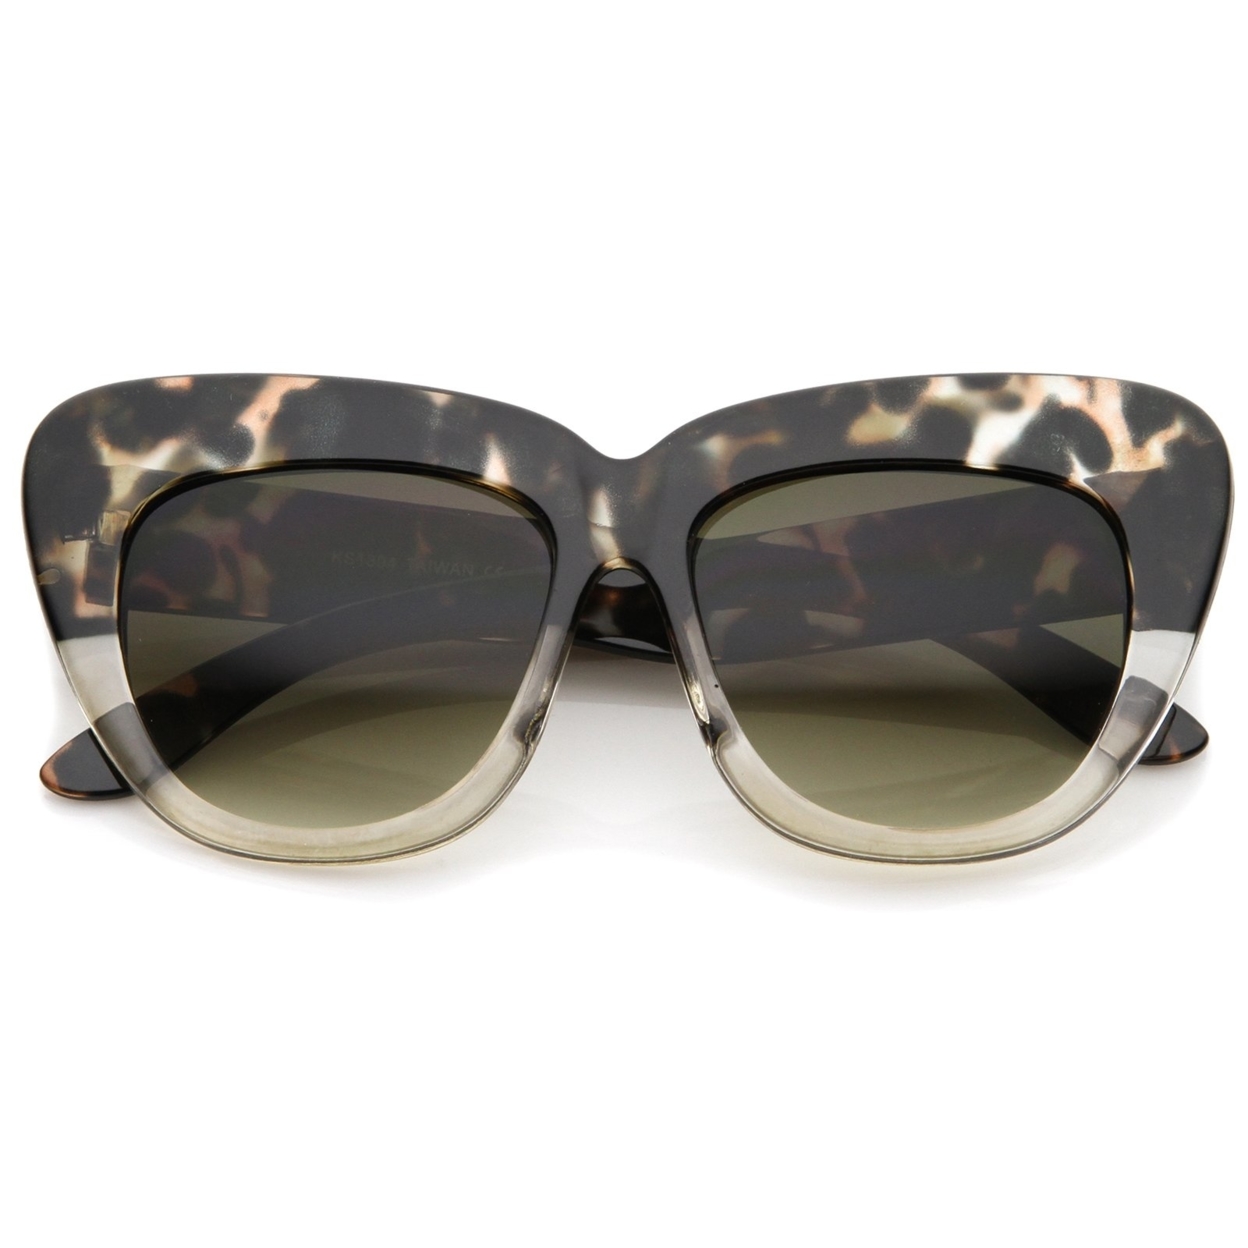 Oversize Printed Frame Wide Temple Square Lens Cat Eye Sunglasses 55mm - Black-Tortoise-Fade / Lavender